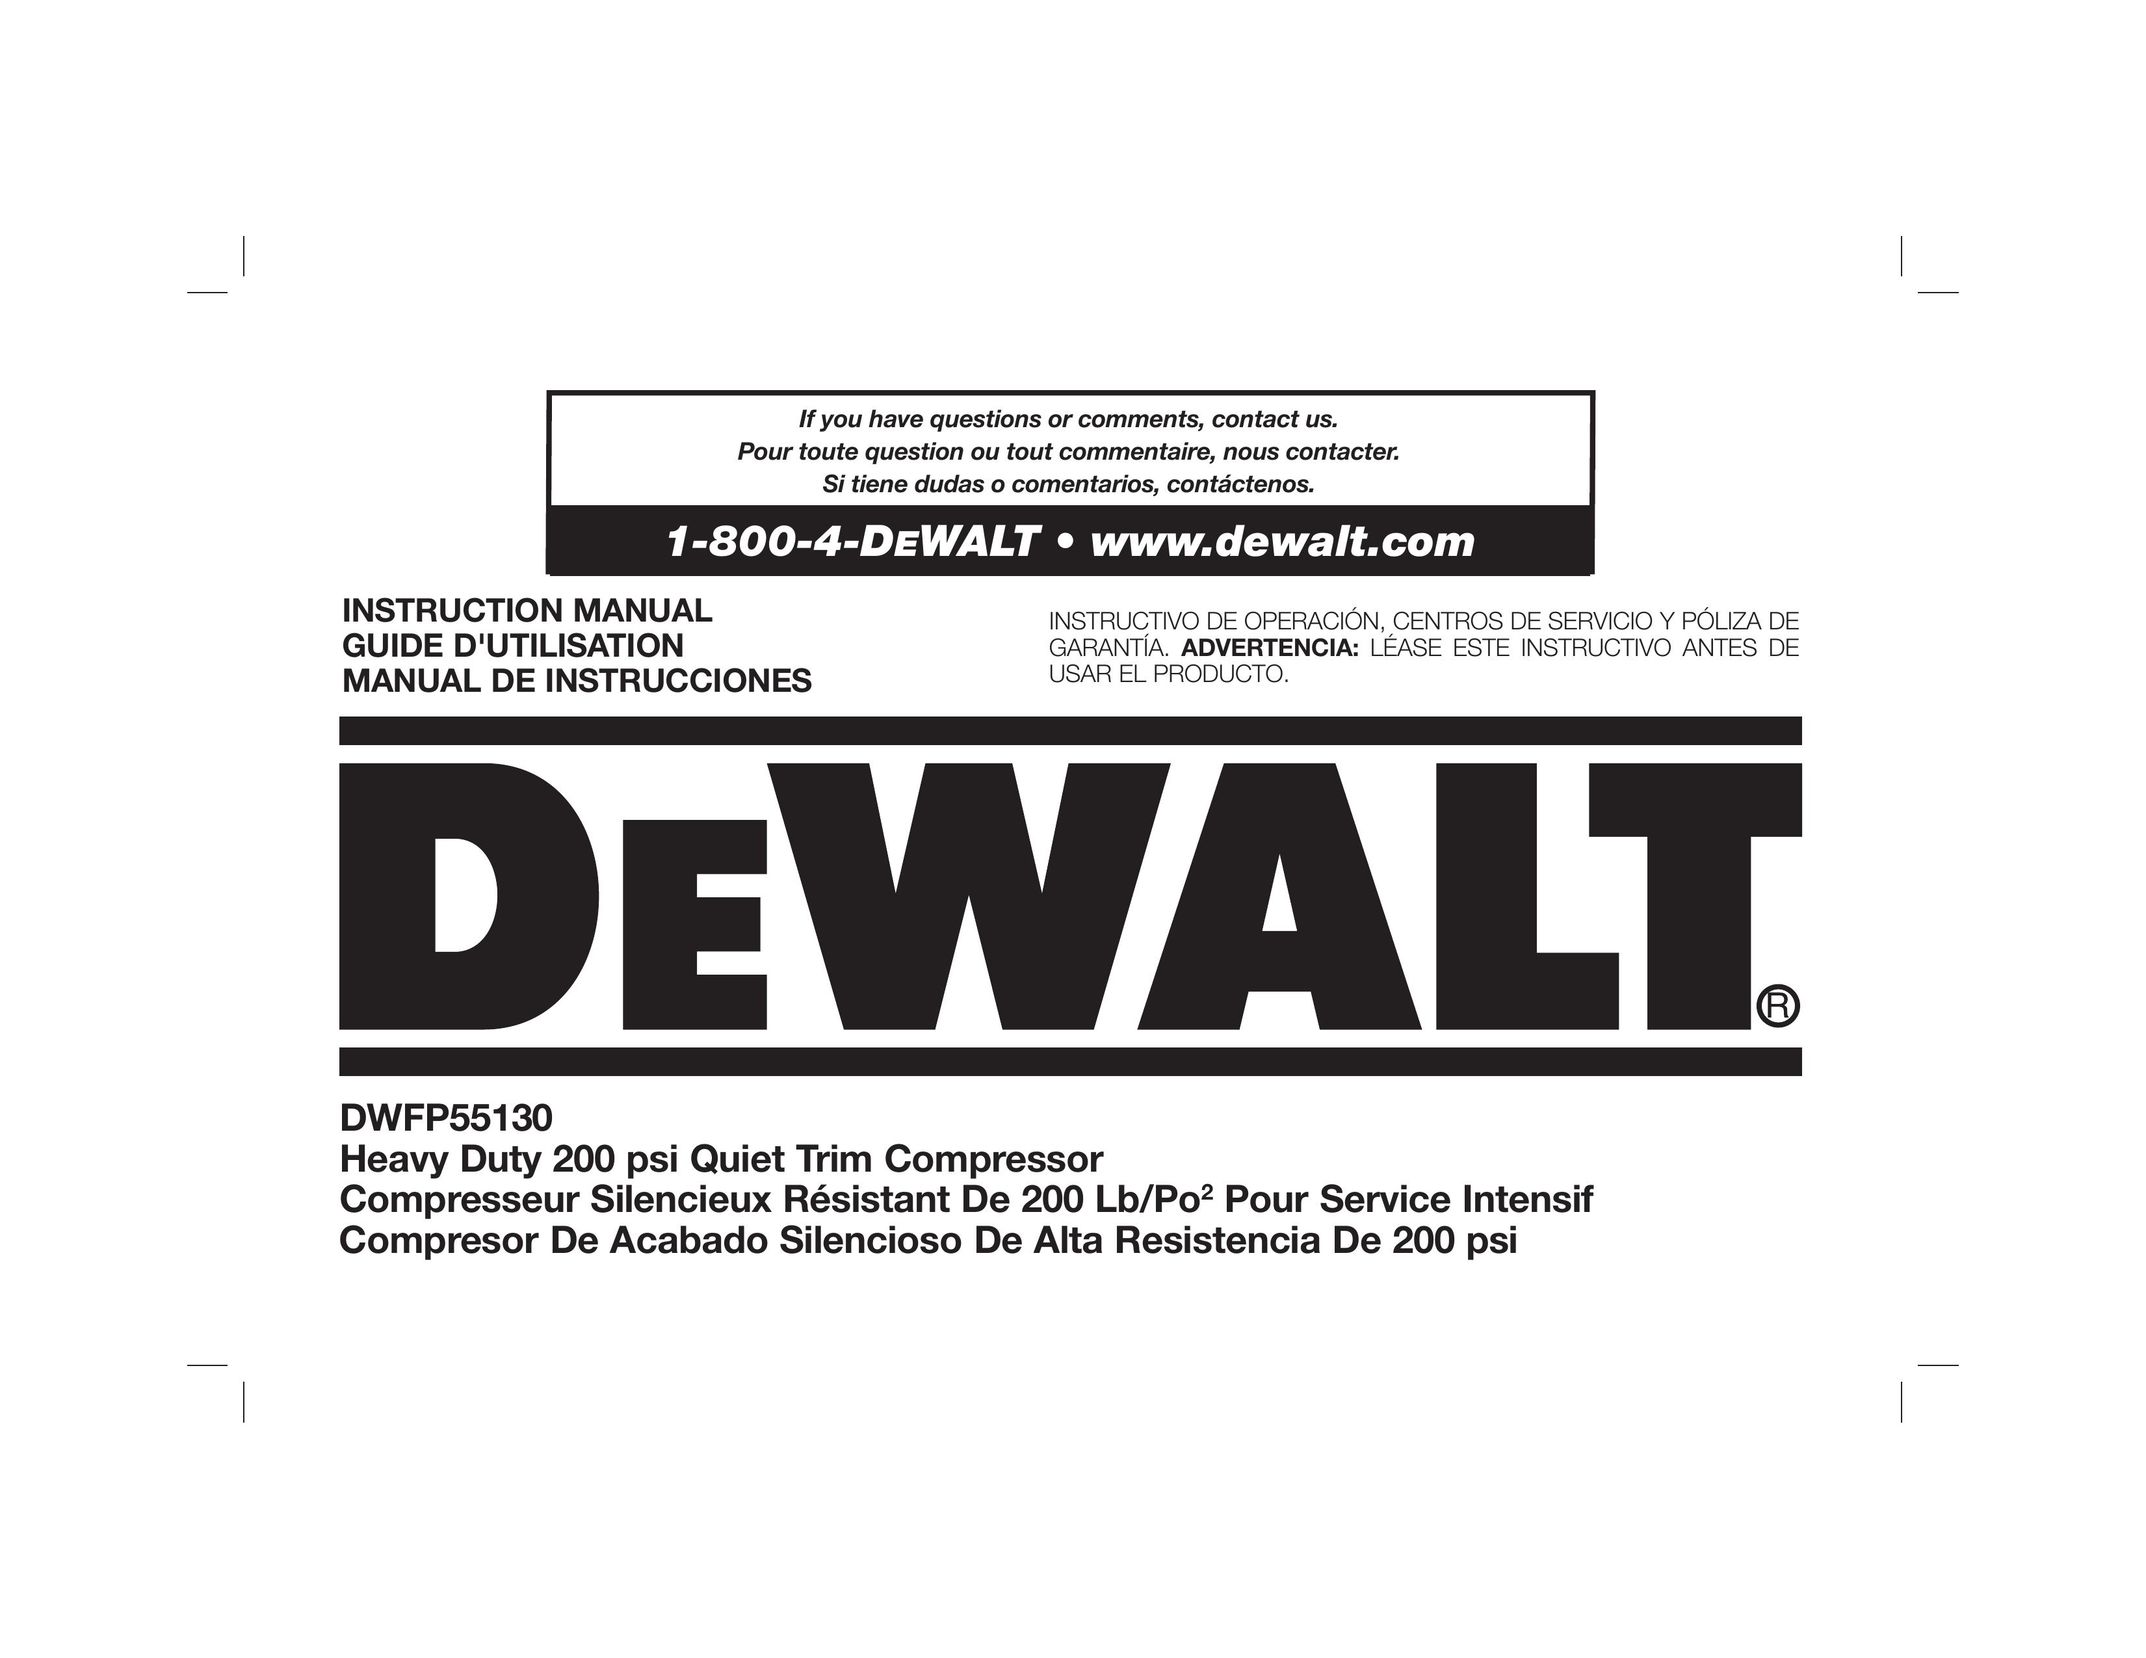 DeWalt DWFP55130 Air Compressor User Manual